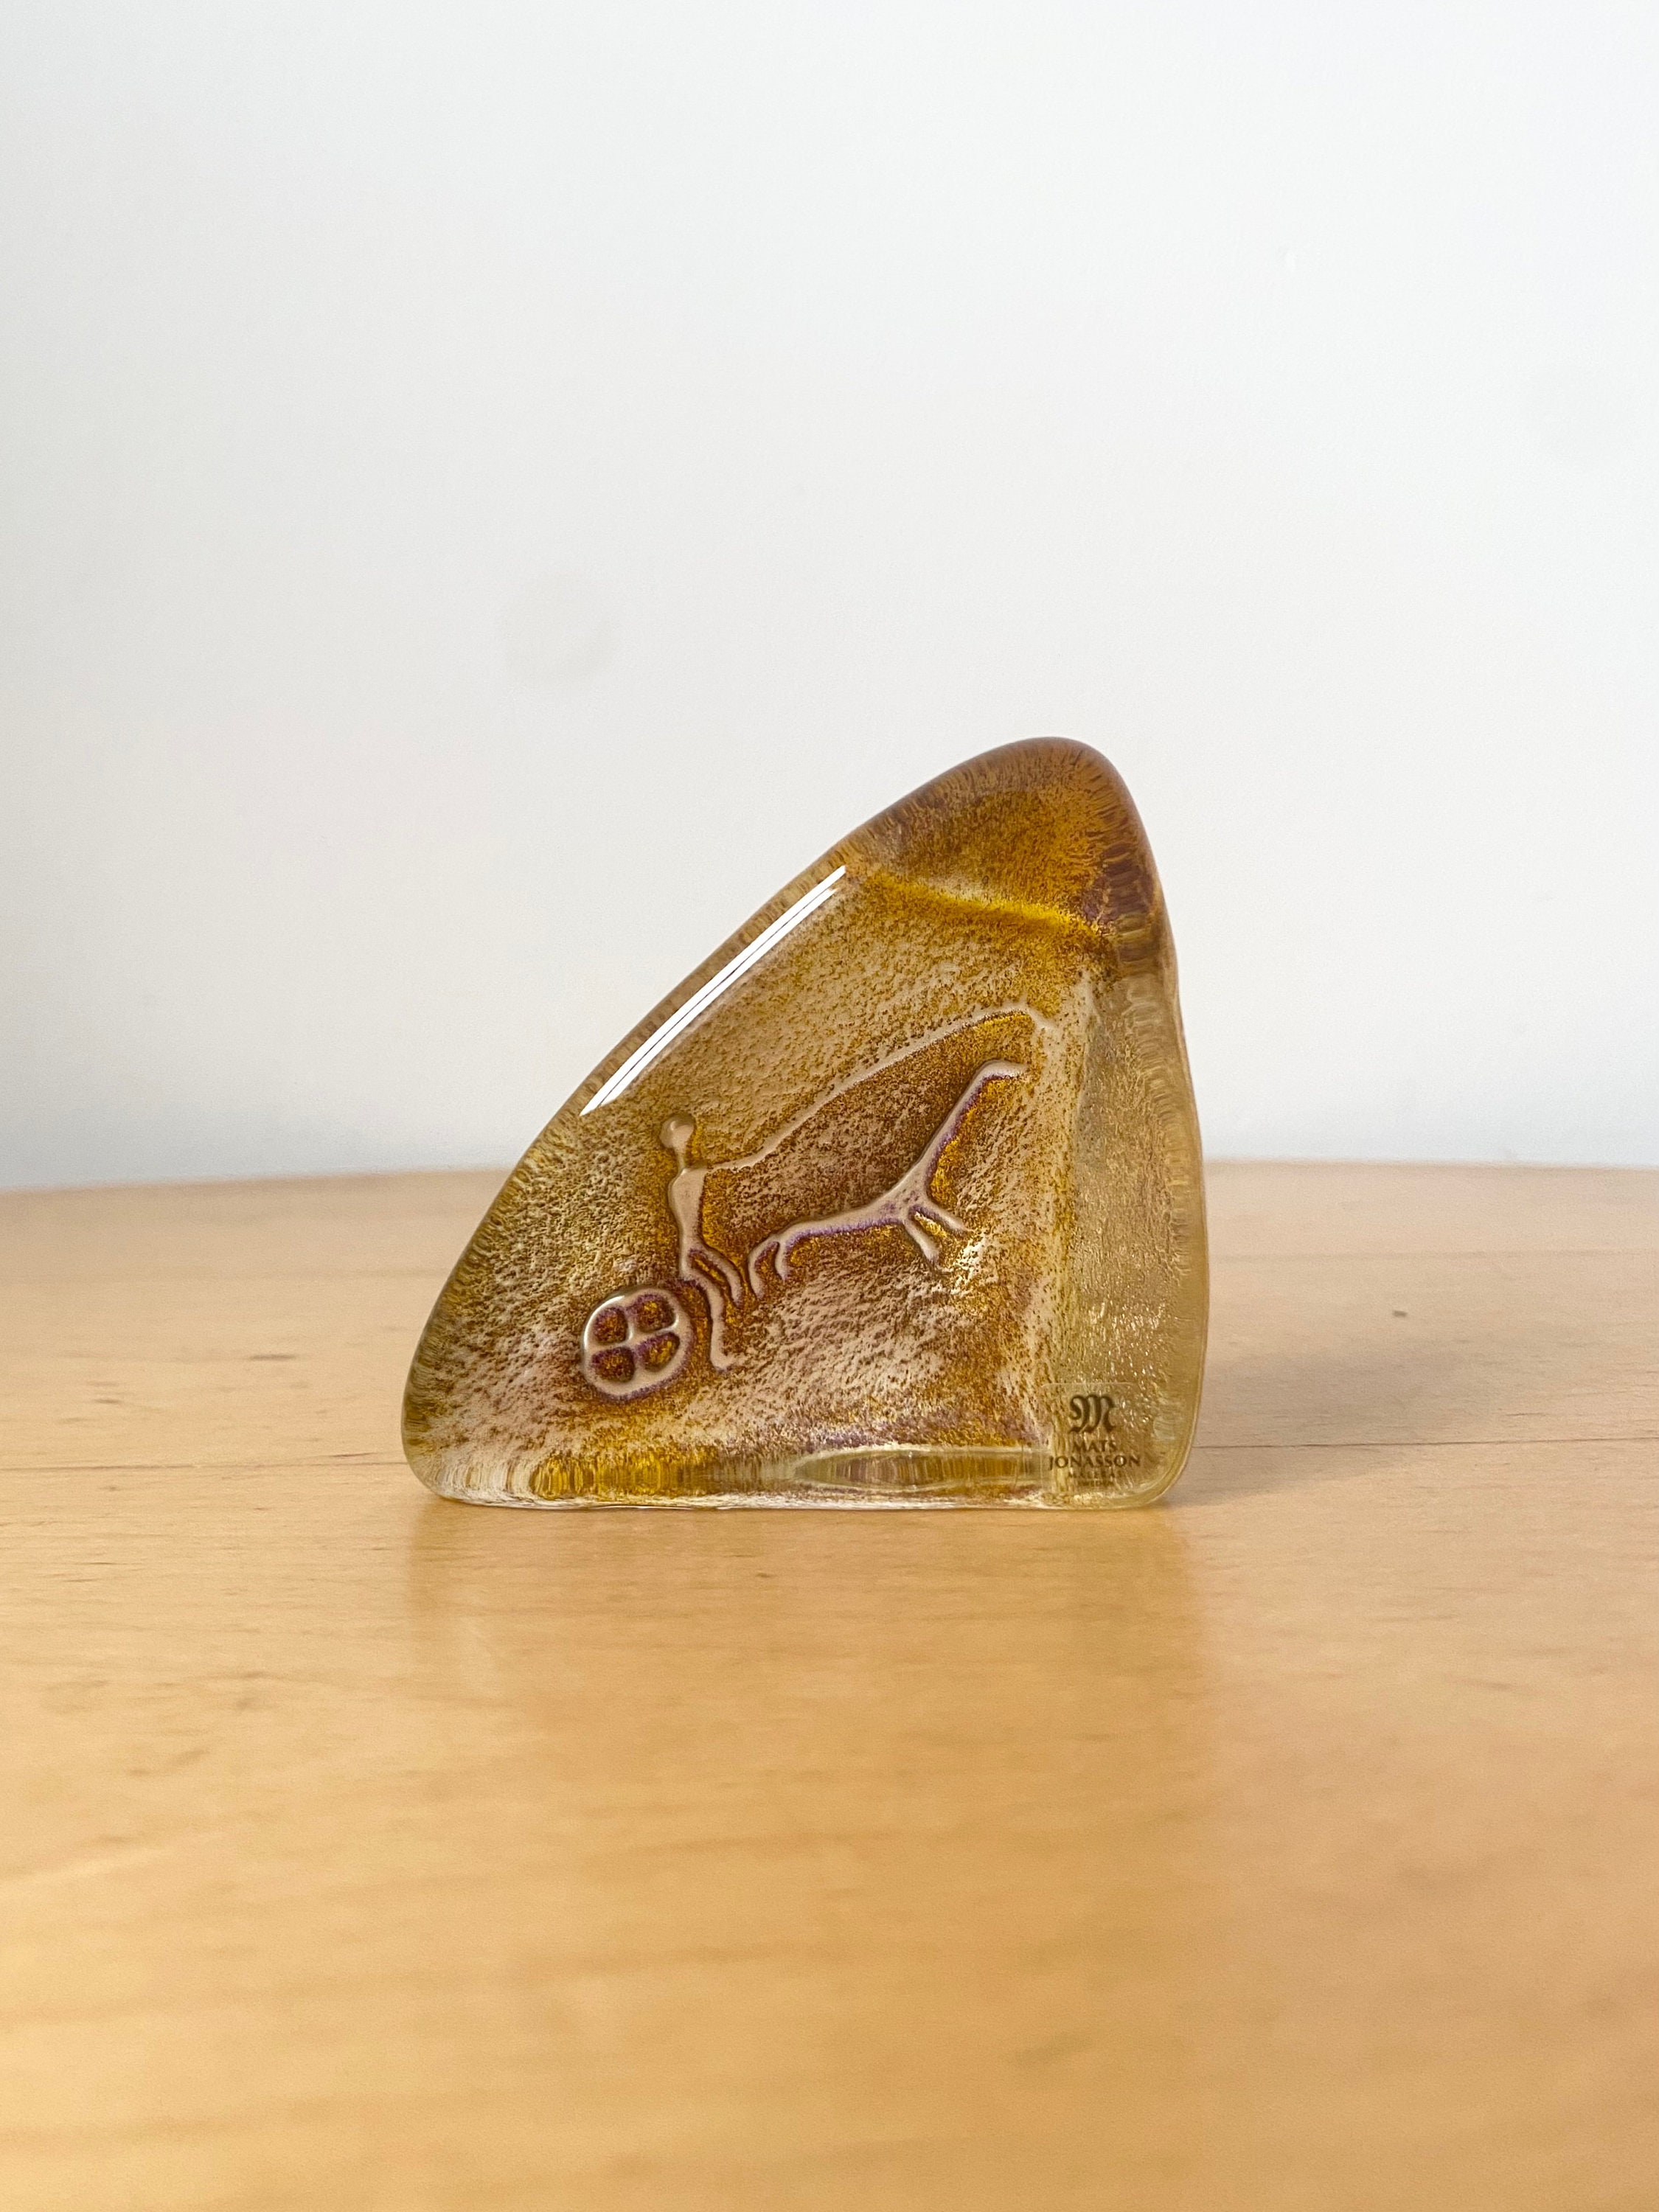 Mats Jonasson Crystal Cave Rock Carving Amber Paperweight 3801, Målerås  Paperweight, Small Paperweight, Scandinavian Glass -  Canada